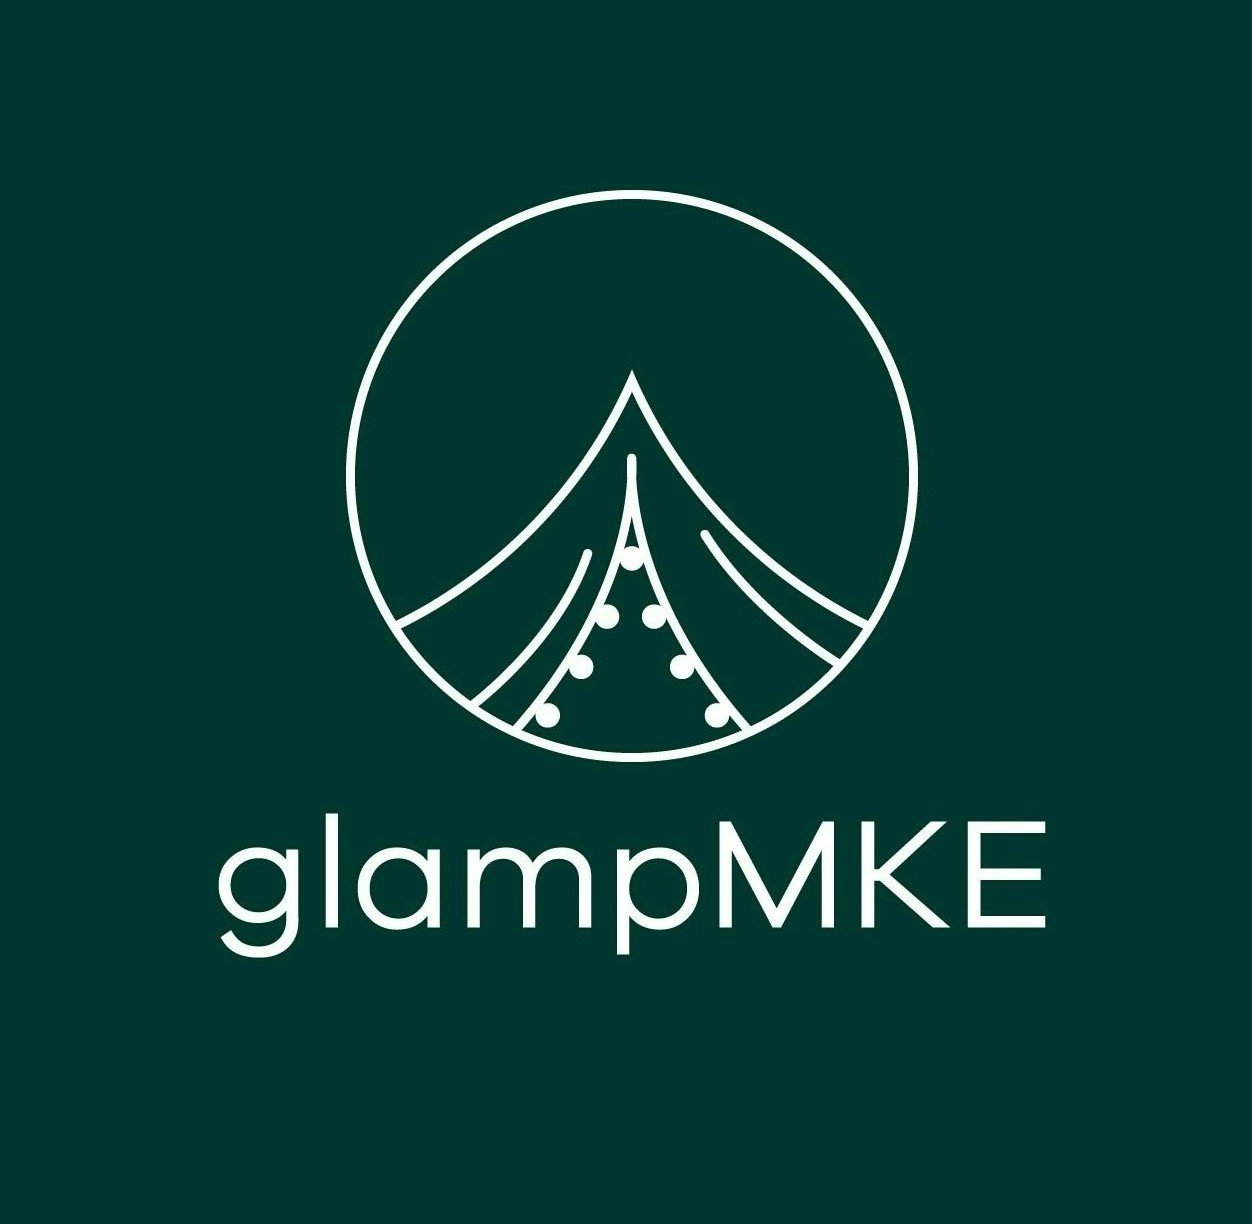 GlampMKE Logo-A13 (1) social.jpg